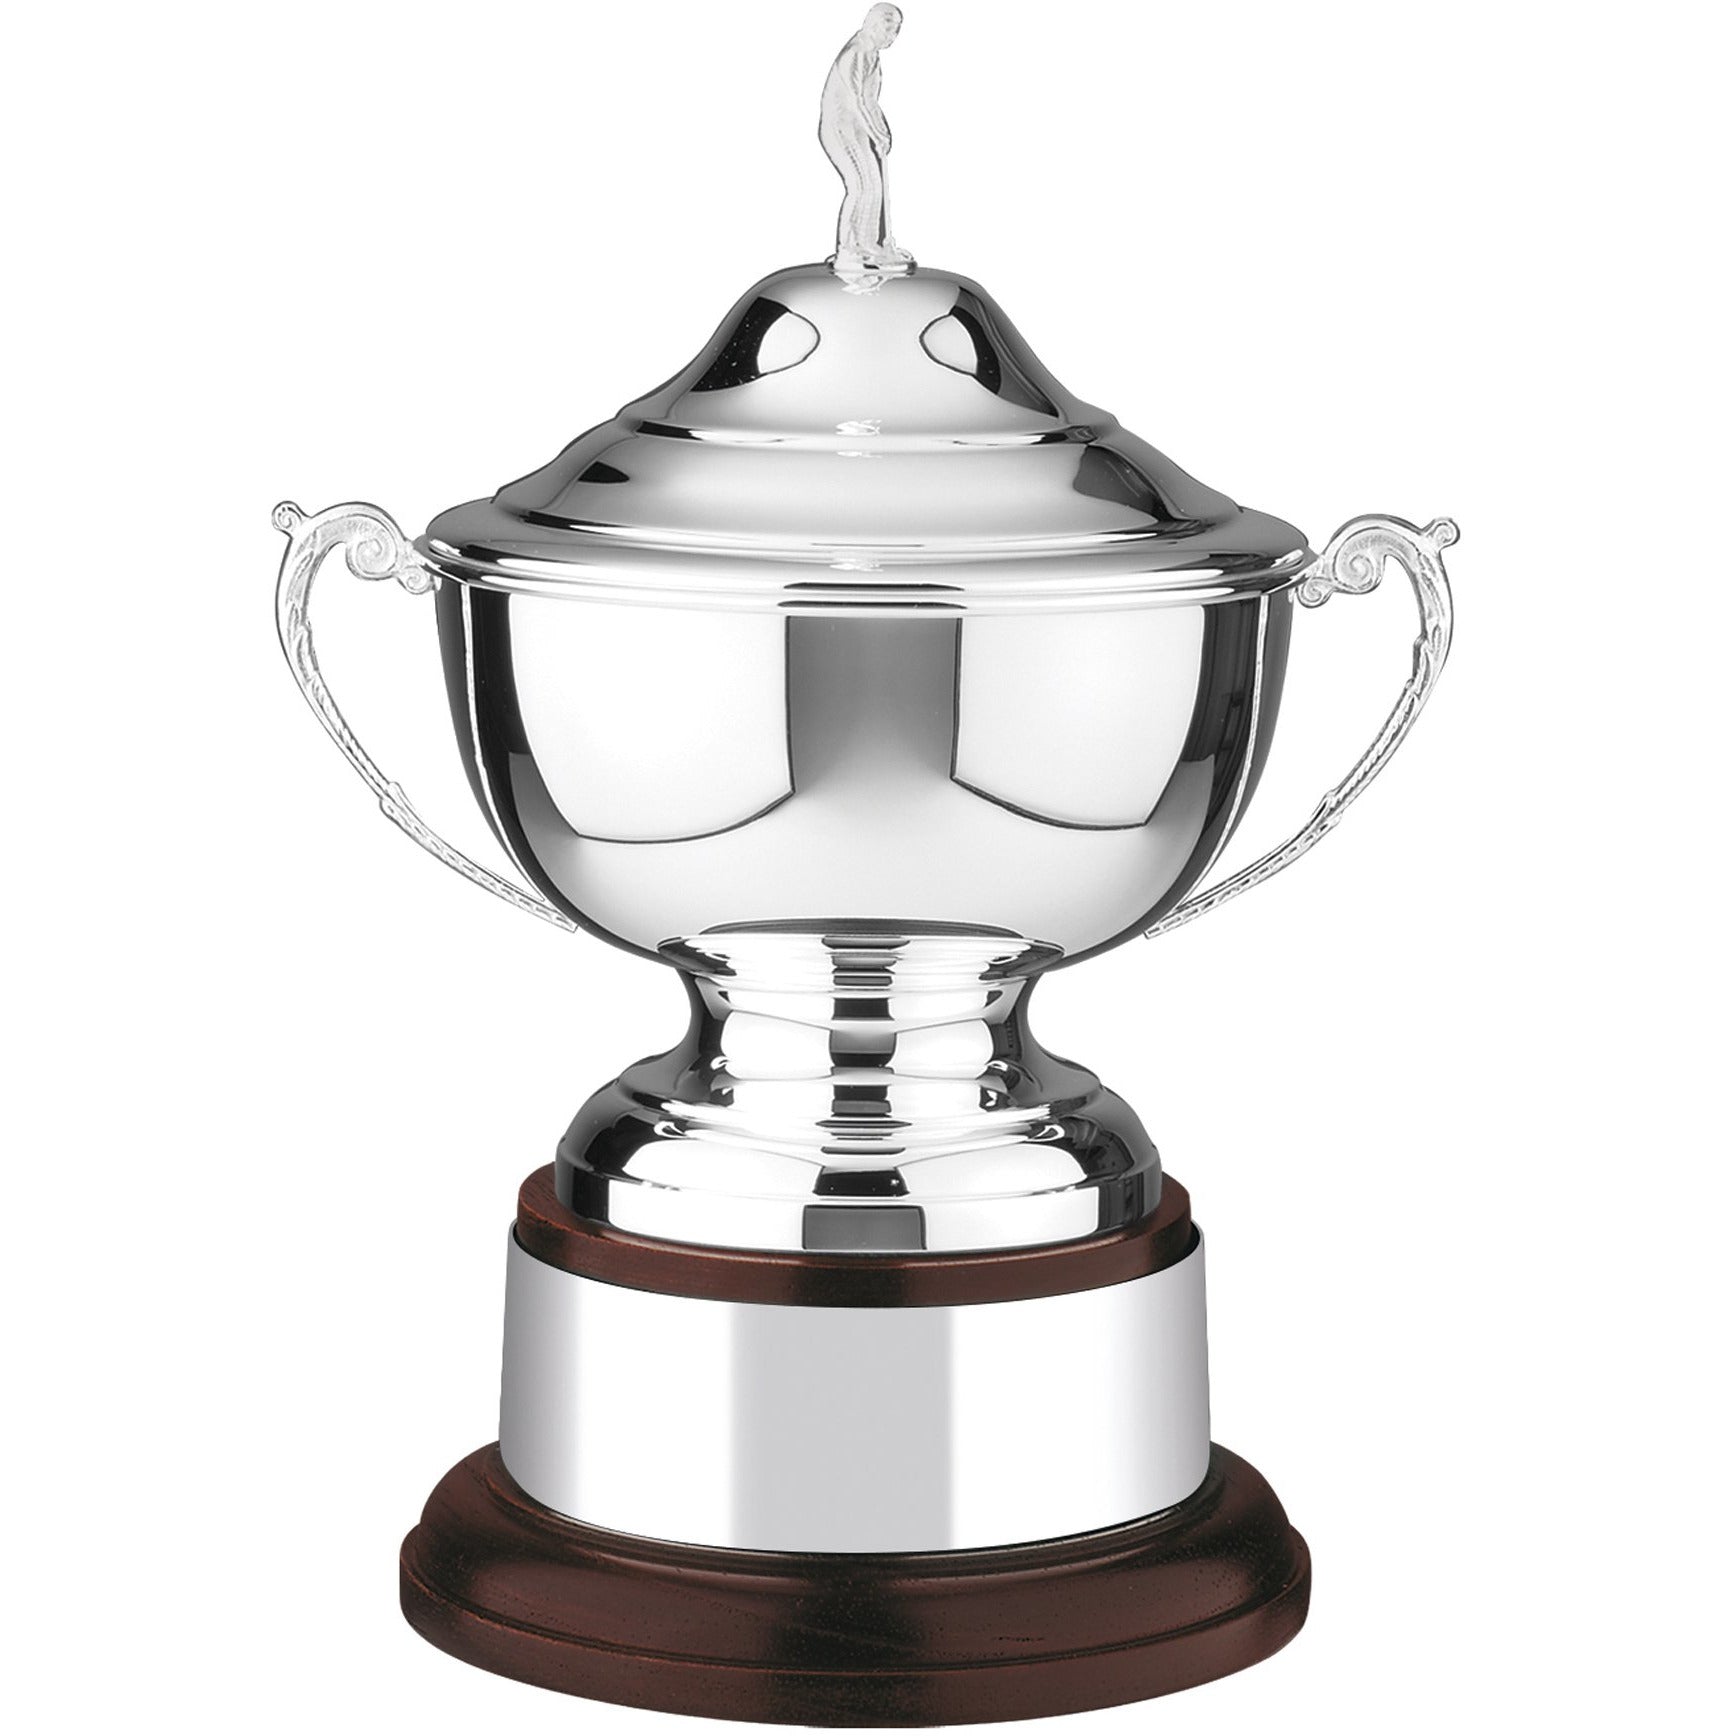 The Golfing Challenge Bowl & Lid Award